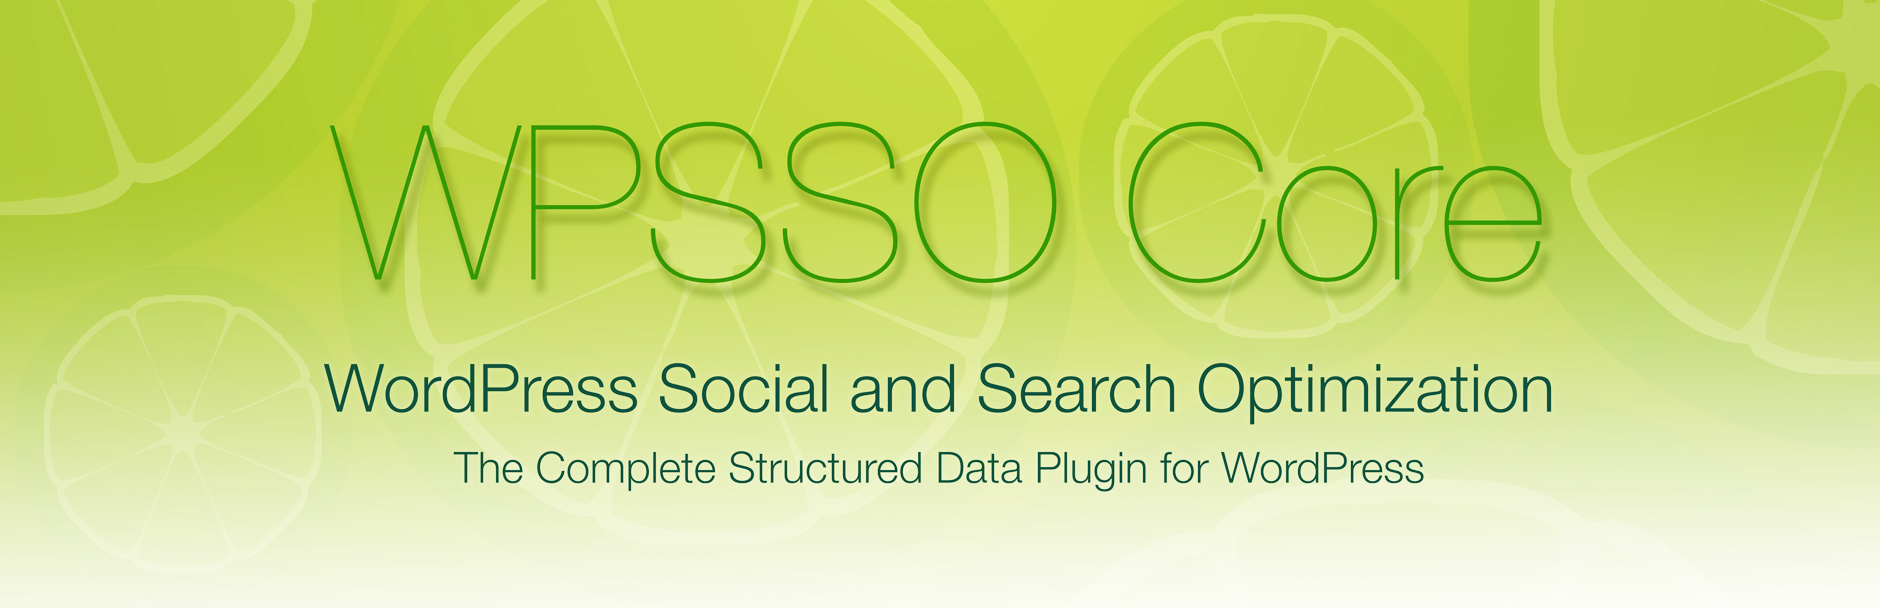 WPSSO Core — The Complete Structured Data Plugin